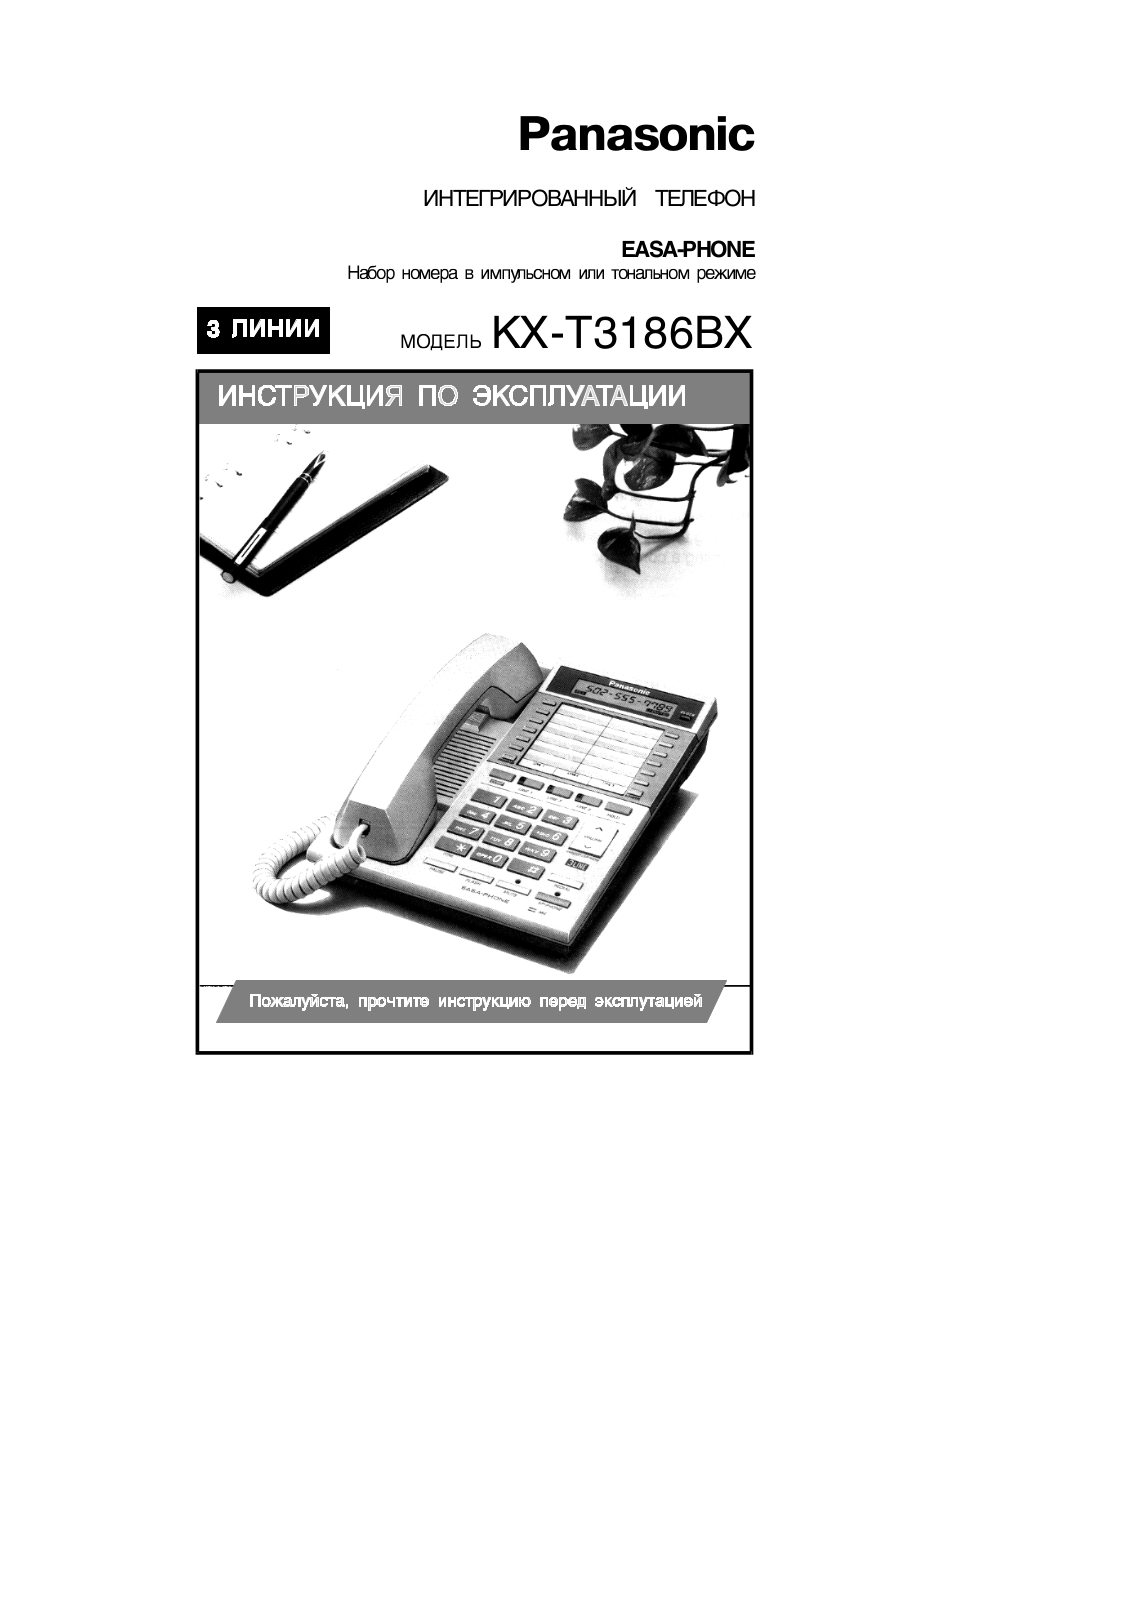 PANASONIC KX-T3186BX User Manual